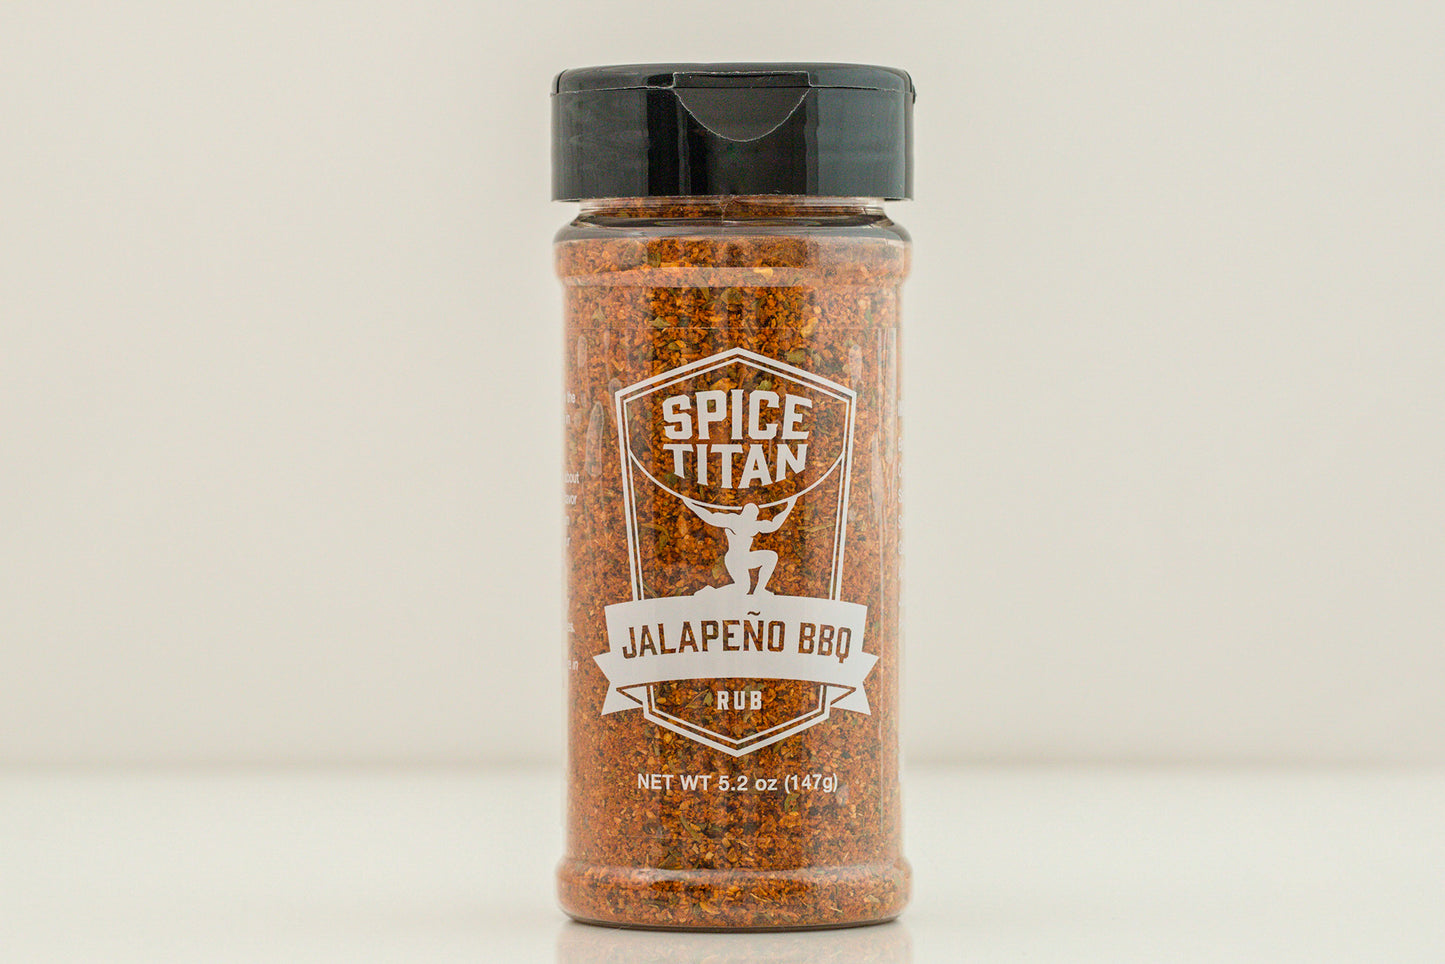 Jalapeño BBQ Spicetitan.com